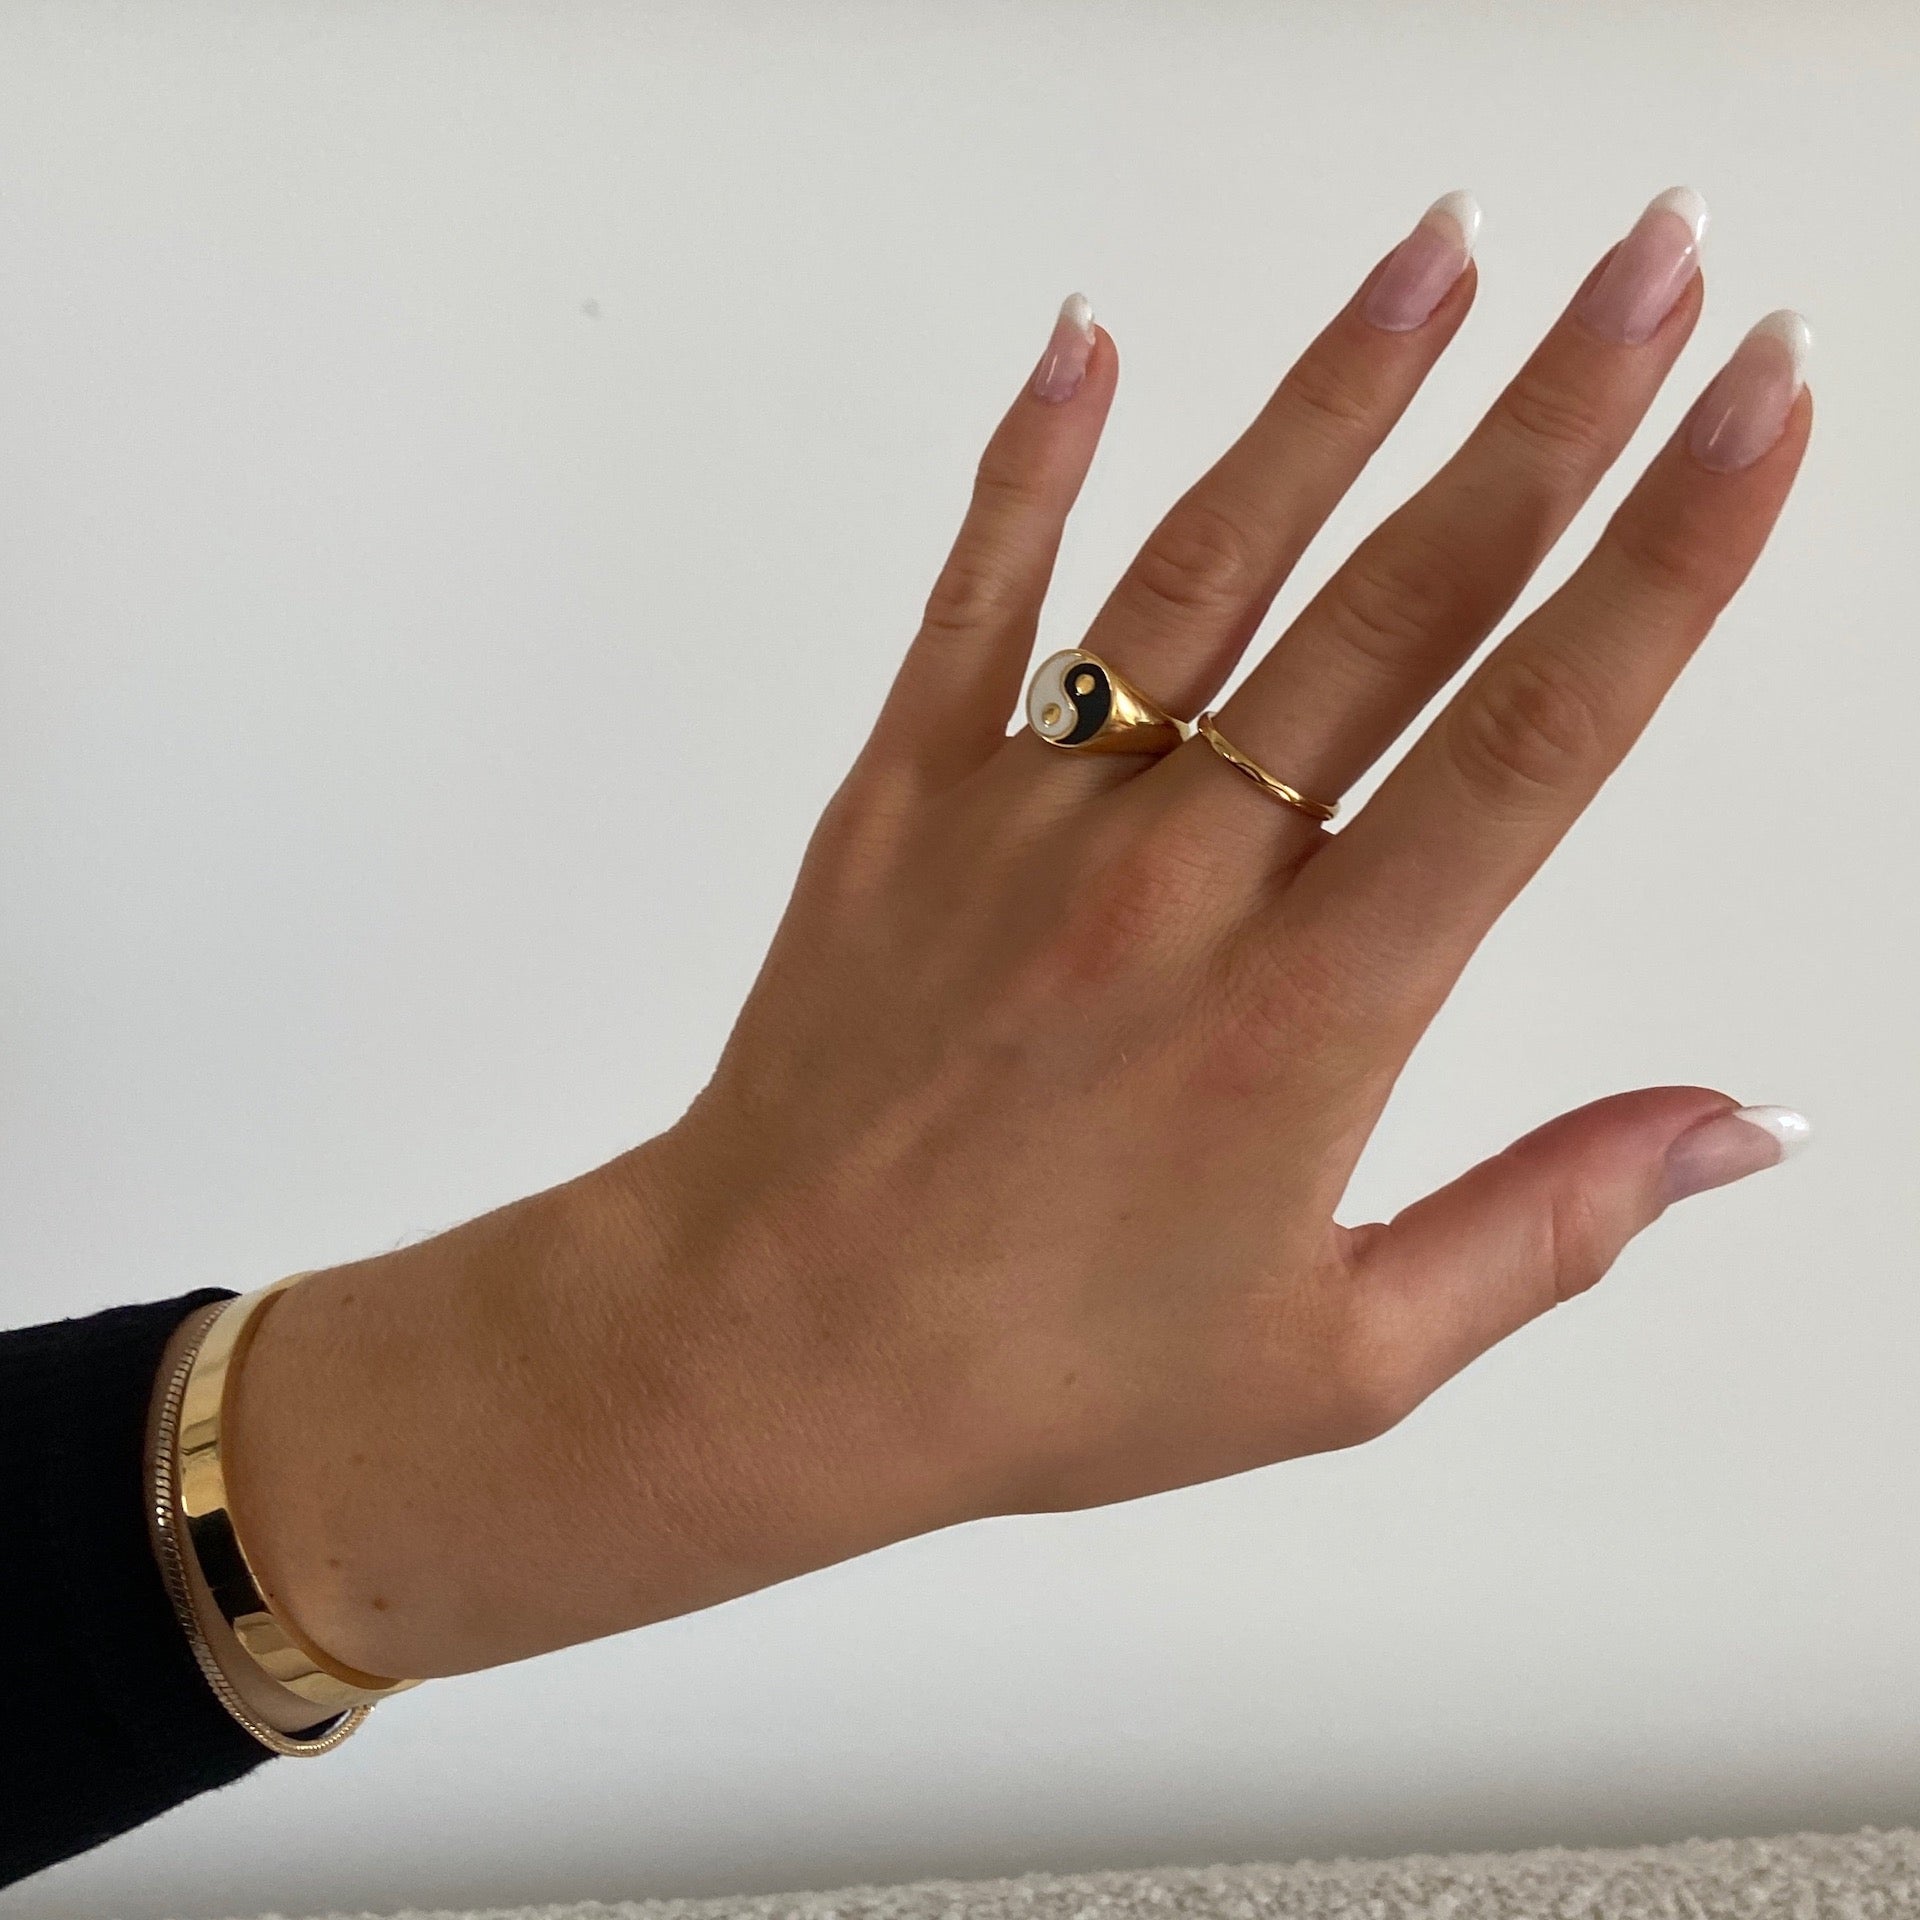 Yin Yang Ring in gold getragen am Ringfinger an Hand von Frau